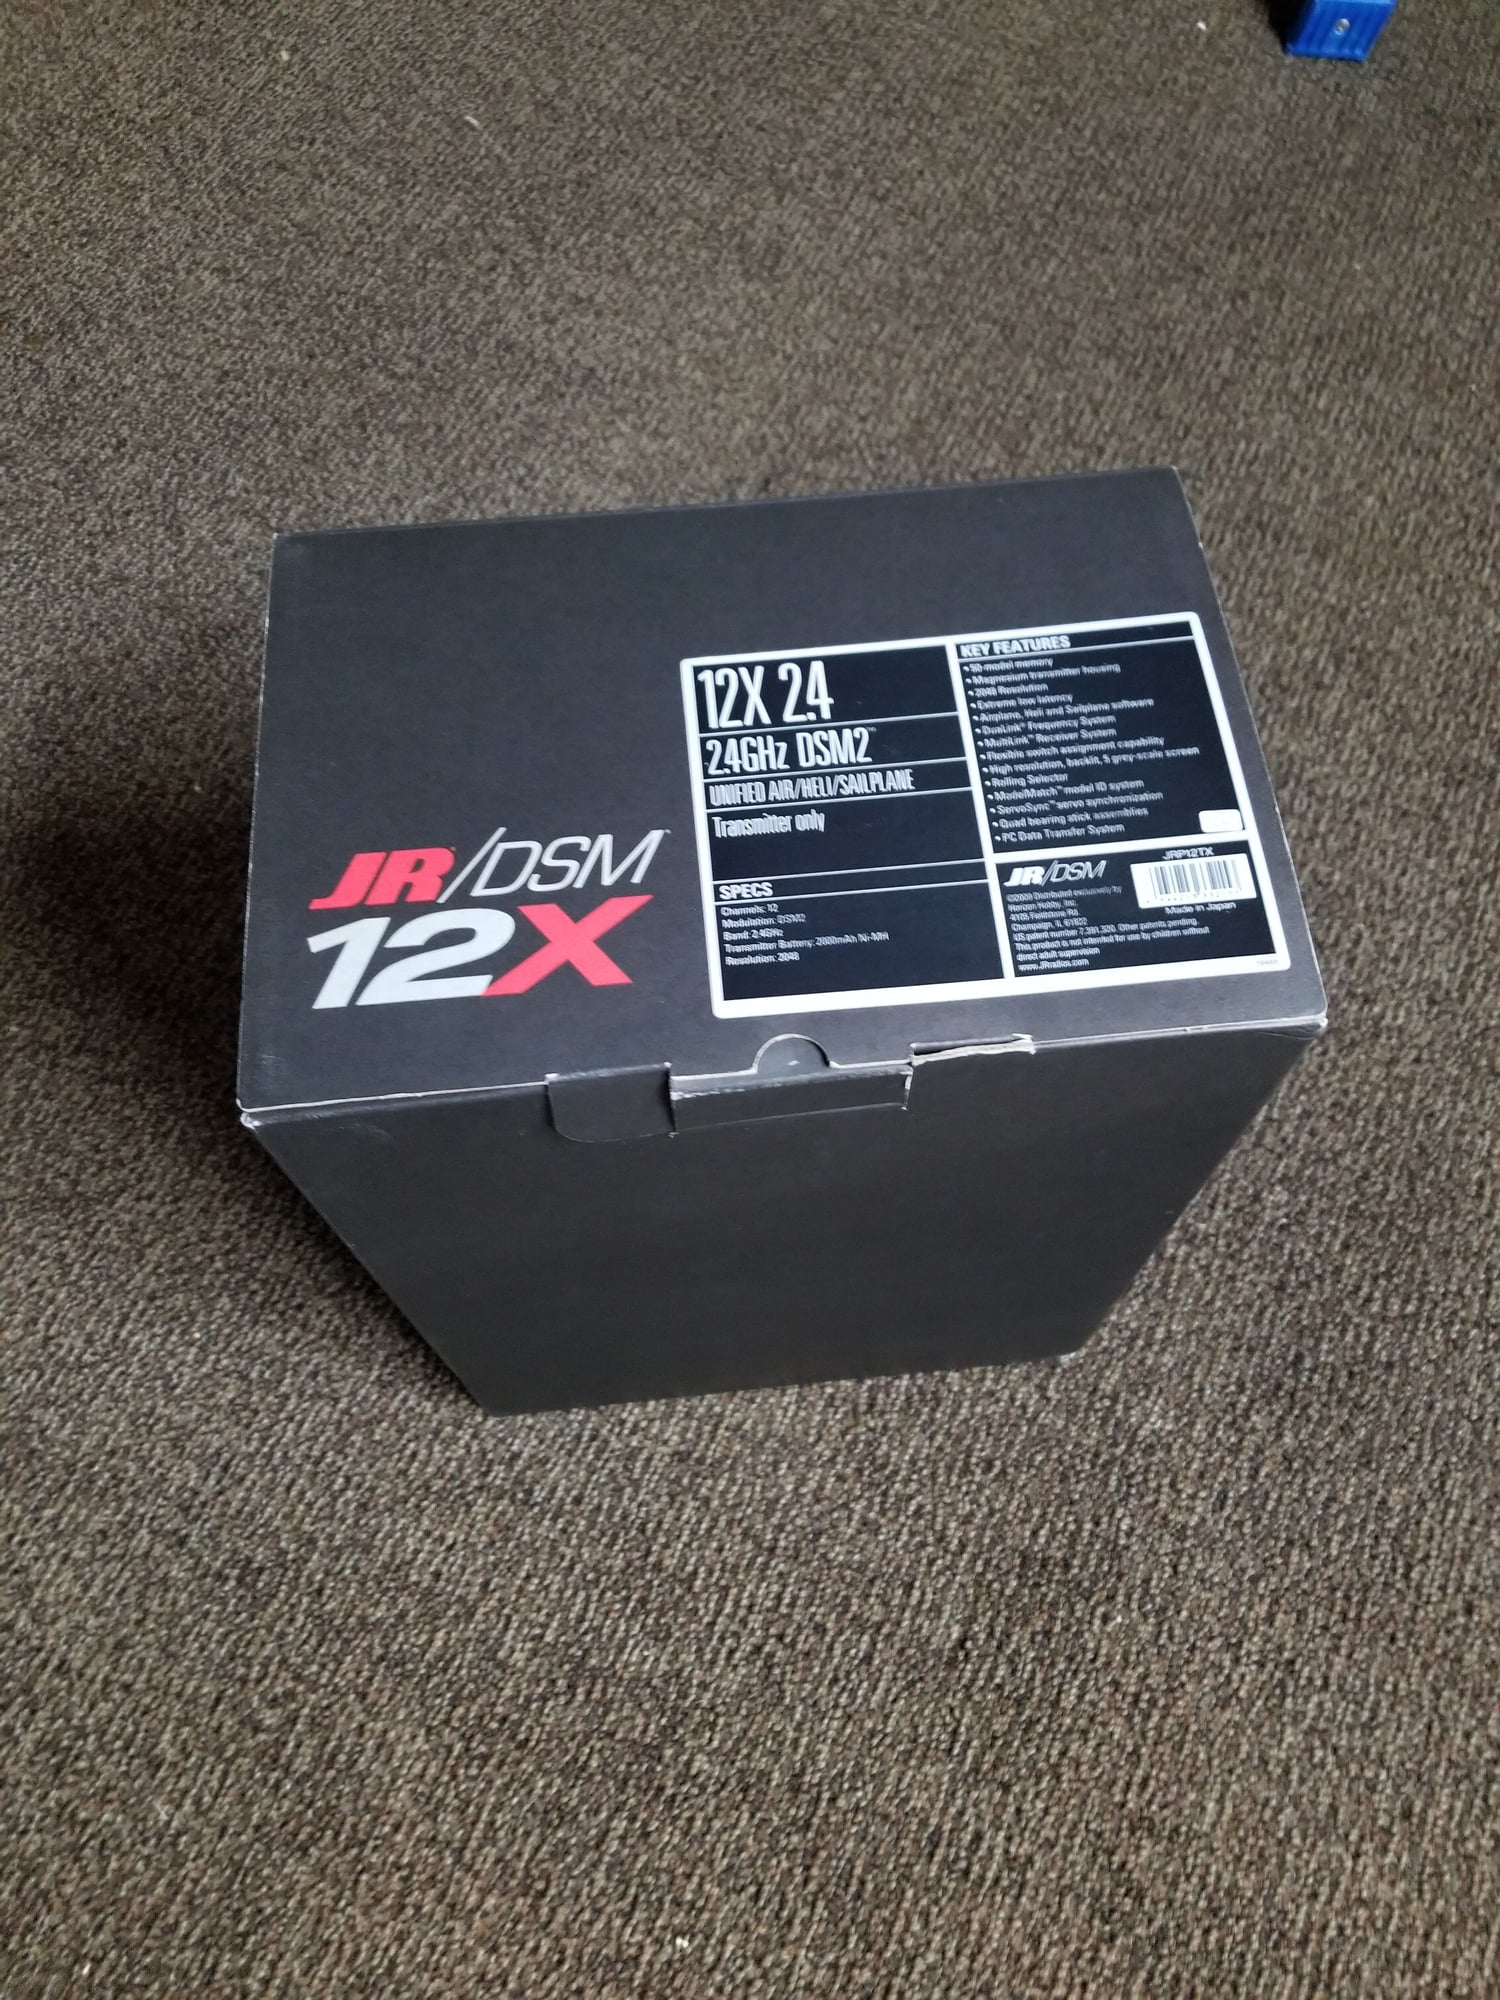 Jr 12x transmitter box - RCU Forums